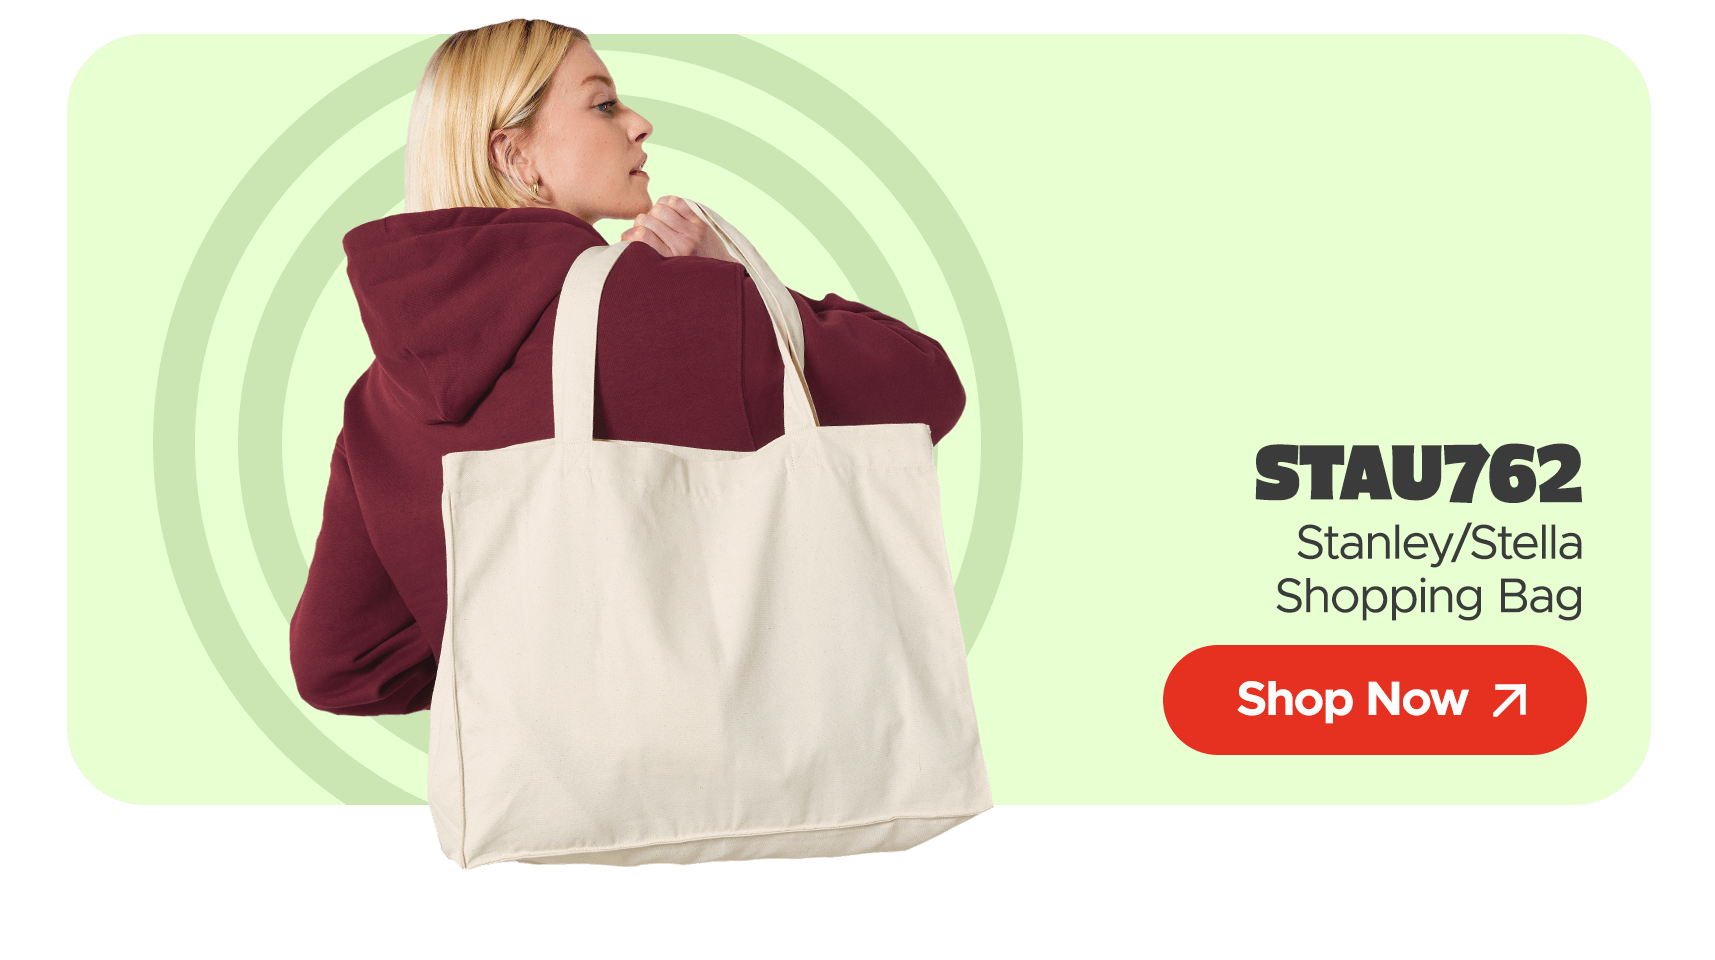 Shopping Bag by Stanley/Stella